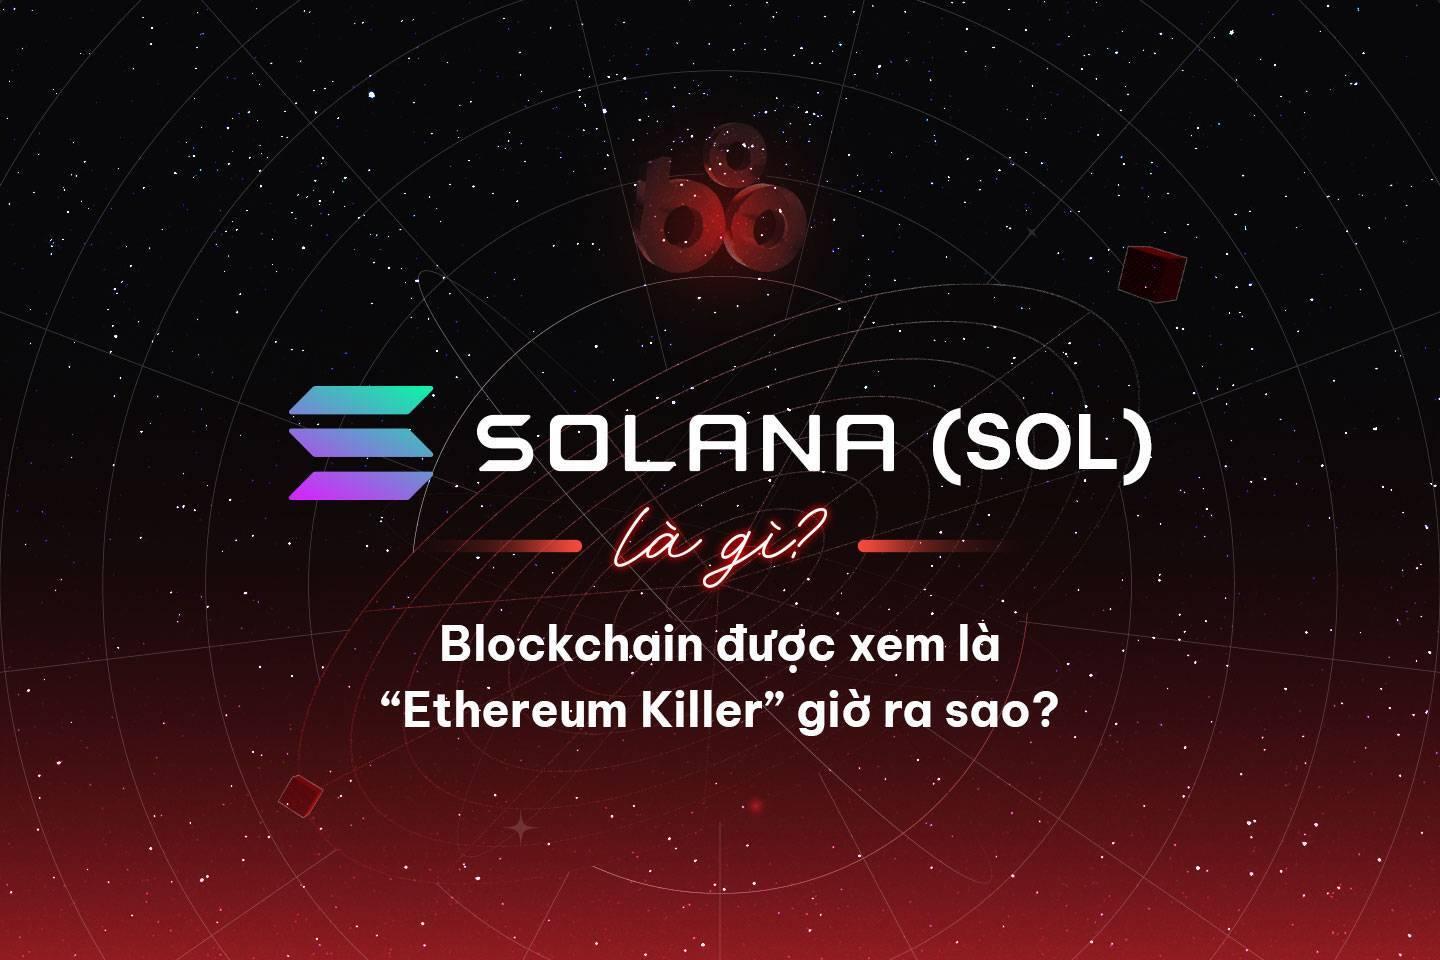 solana-sol-la-gi-blockchain-duoc-xem-la-ethereum-killer-gio-ra-sao